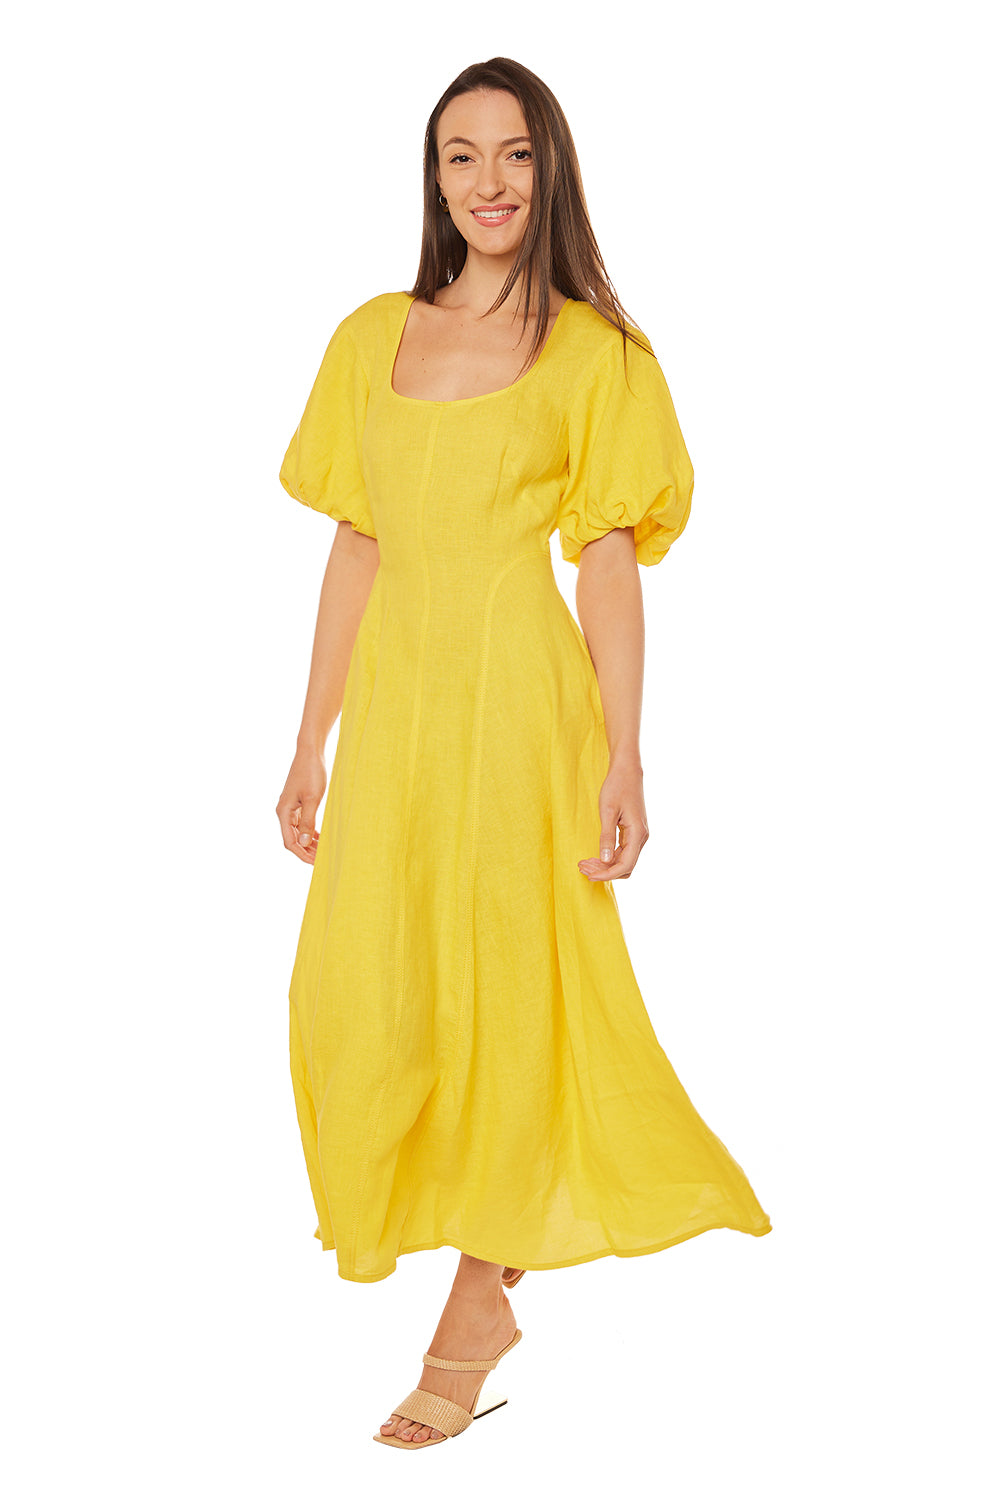 Nell Dress - Sunny Yellow Linen